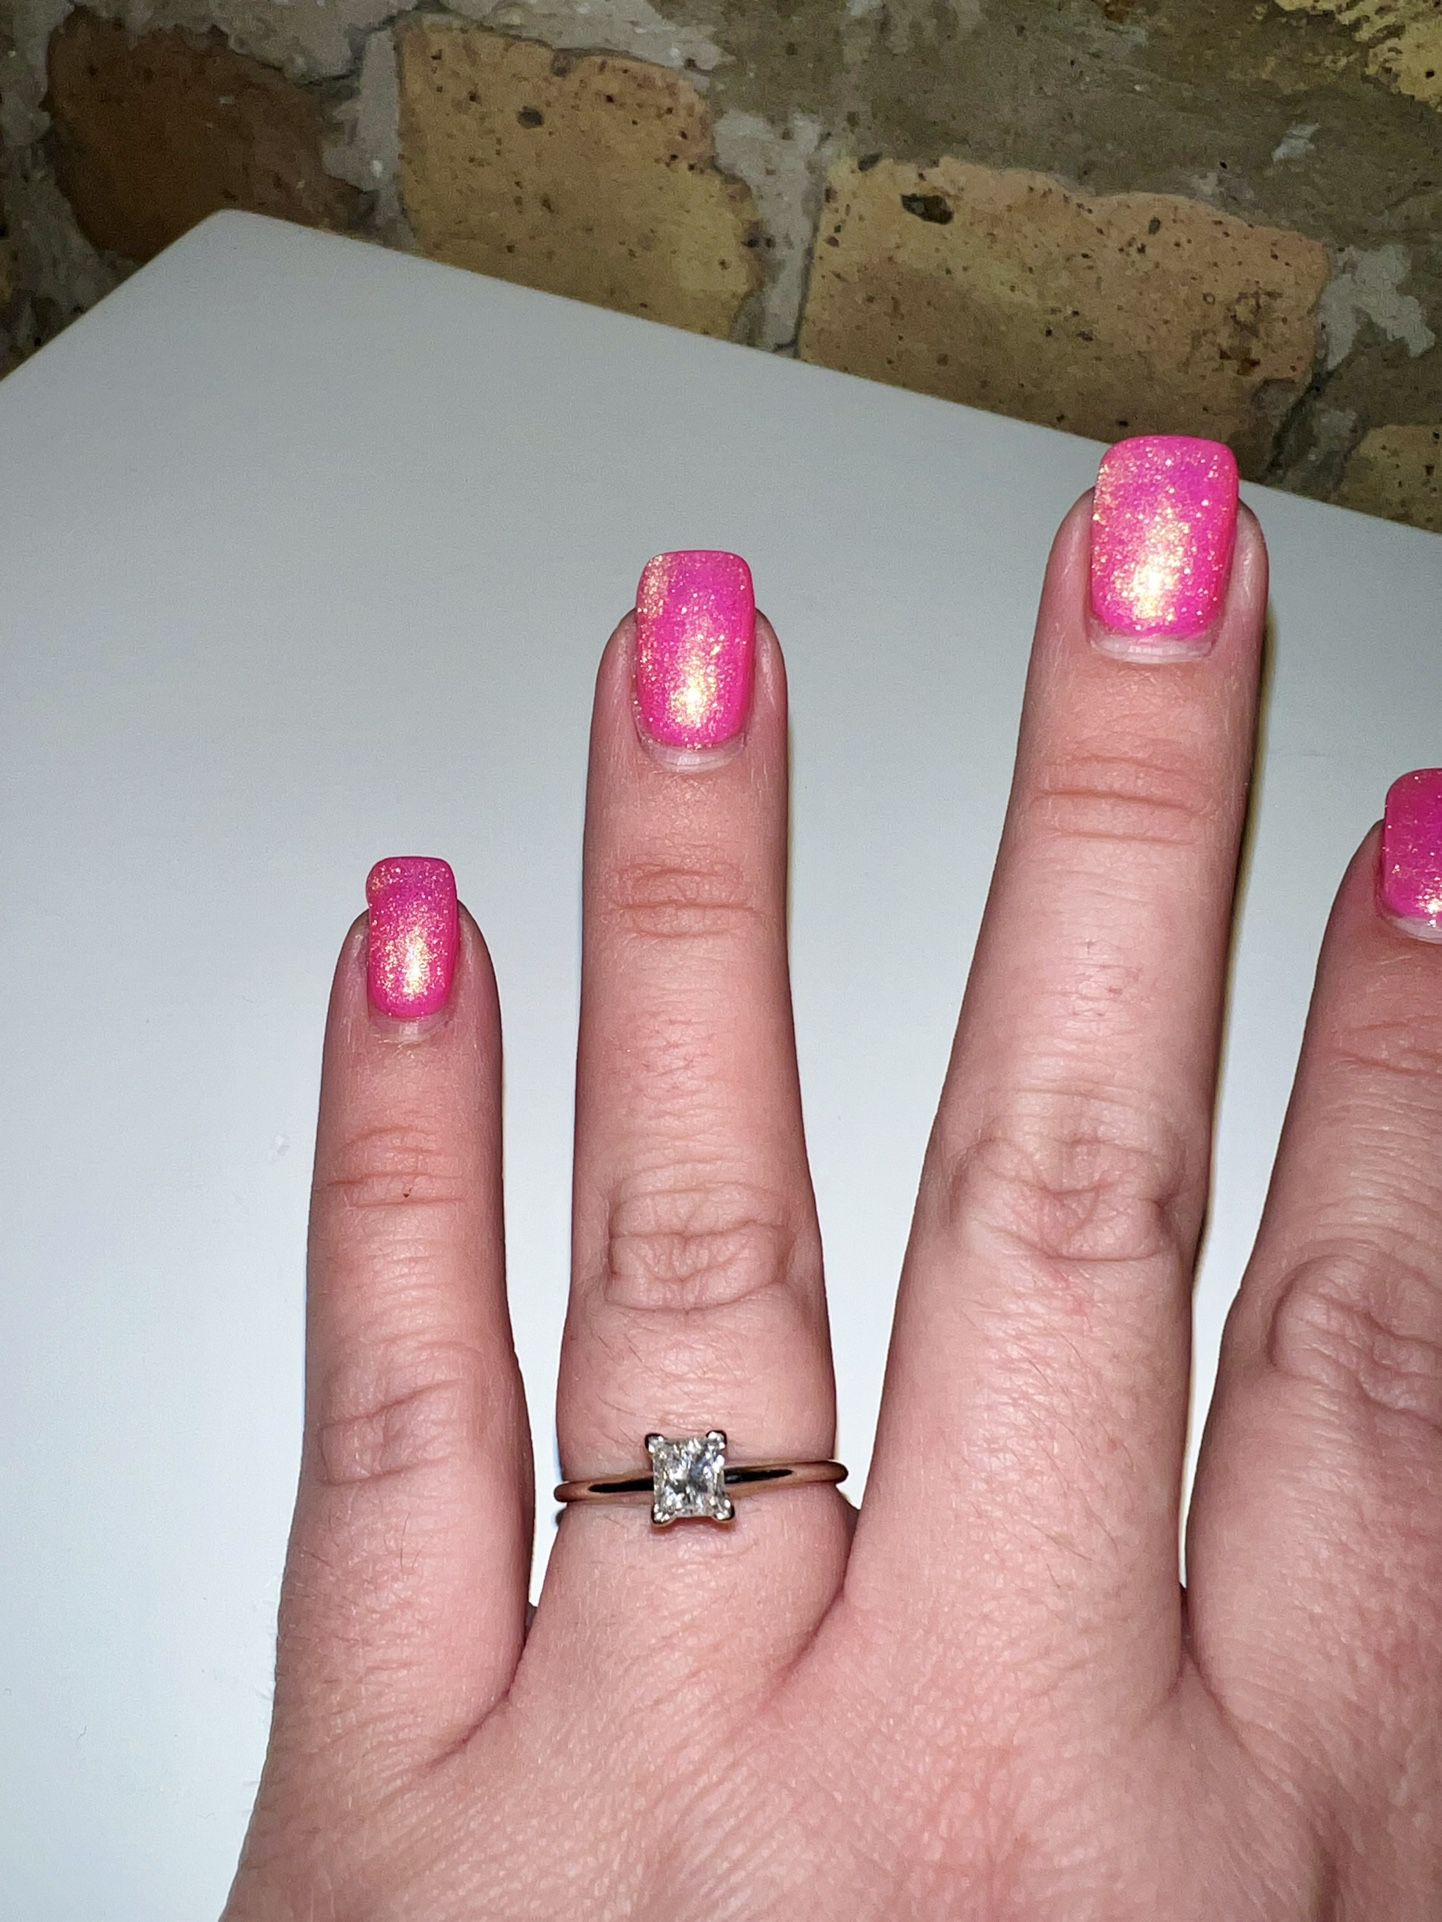 14K White Gold Mined, Genuine Diamond Engagement/Promise Ring Size 7